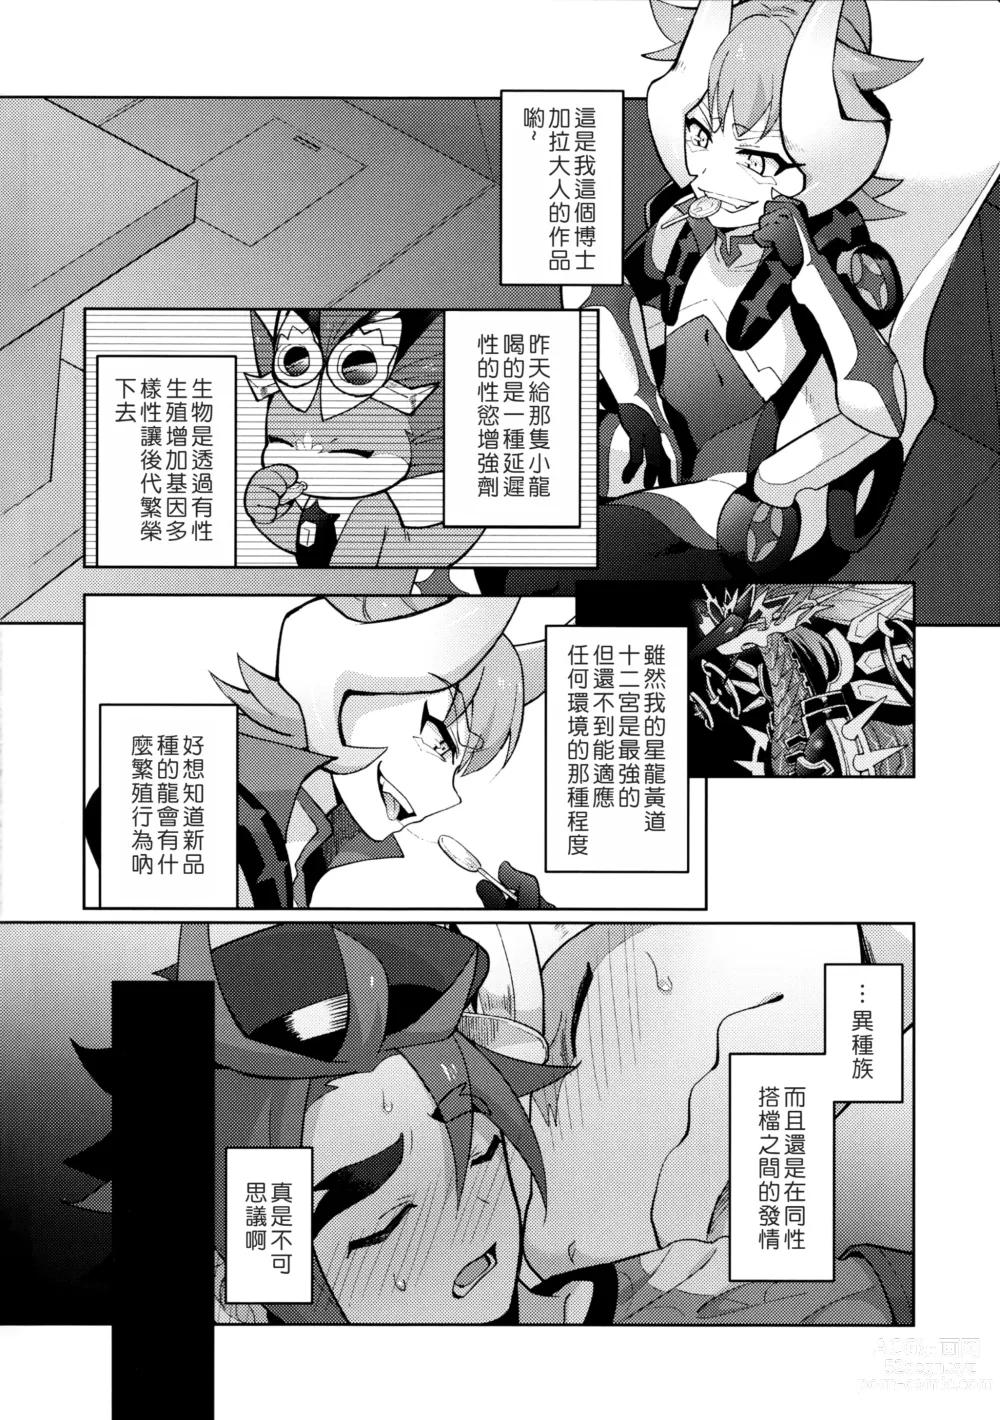 Page 3 of doujinshi 森陷圈套 (decensored)